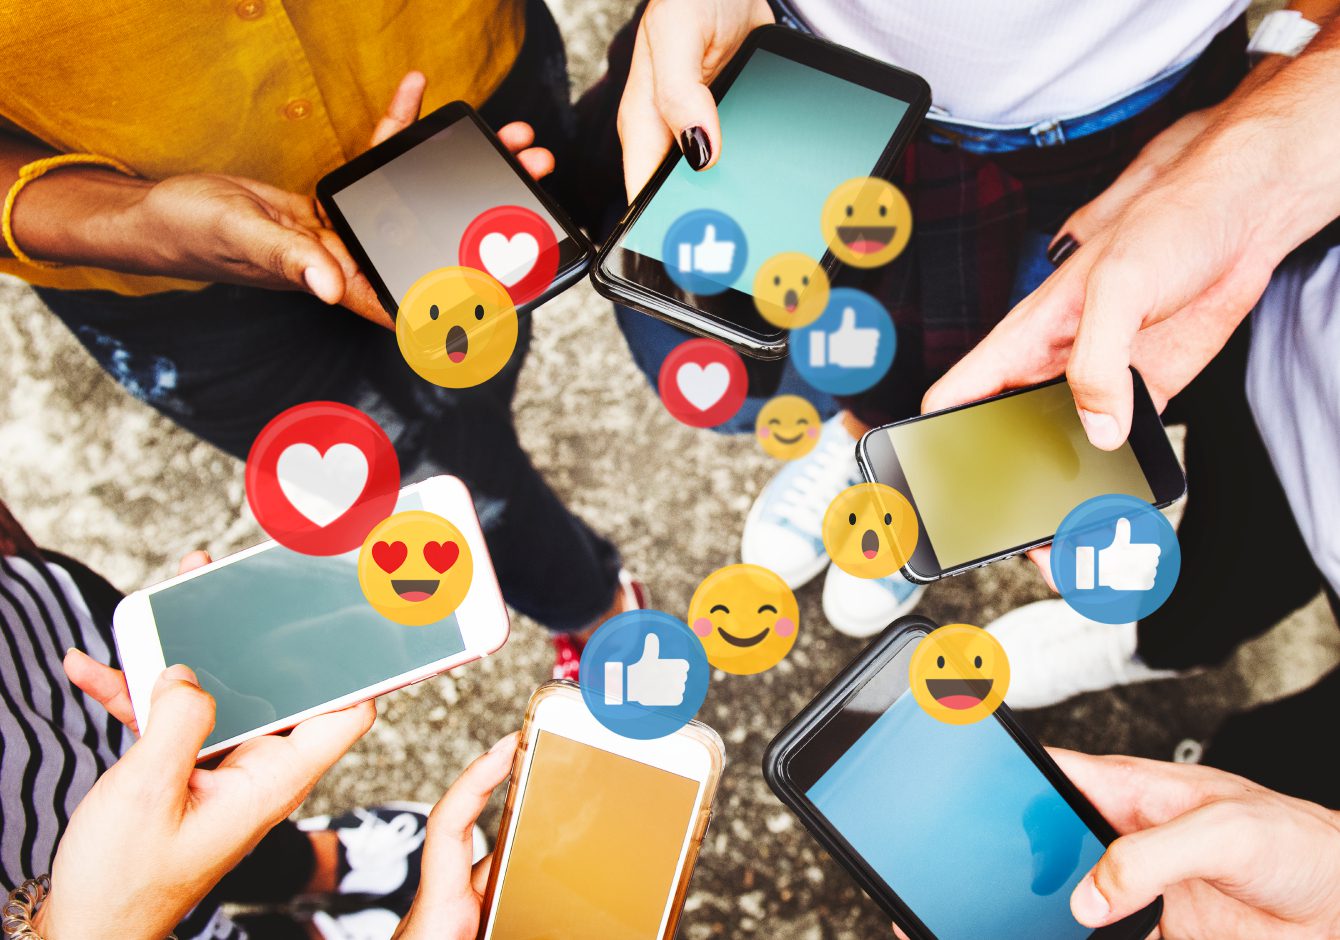 Hands holding smartphones with social media emoji reactions around screens